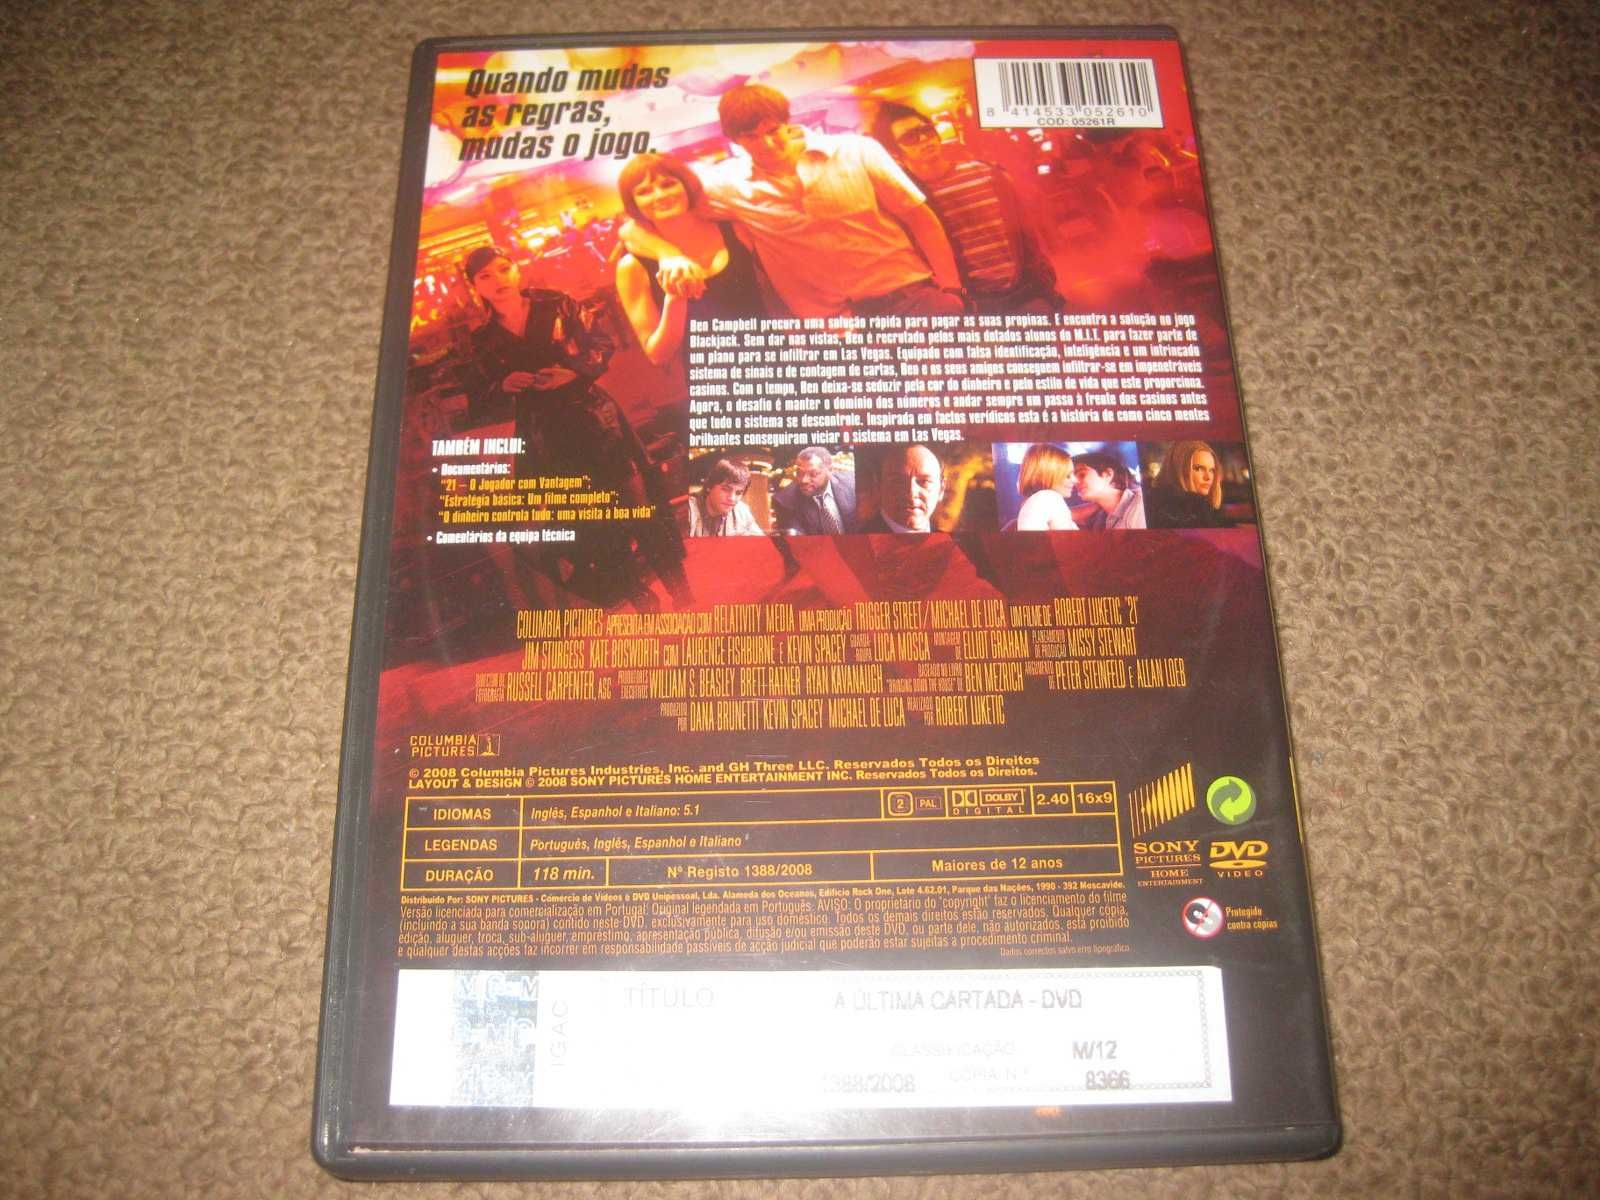 DVD "A Última Cartada" com Kevin Spacey